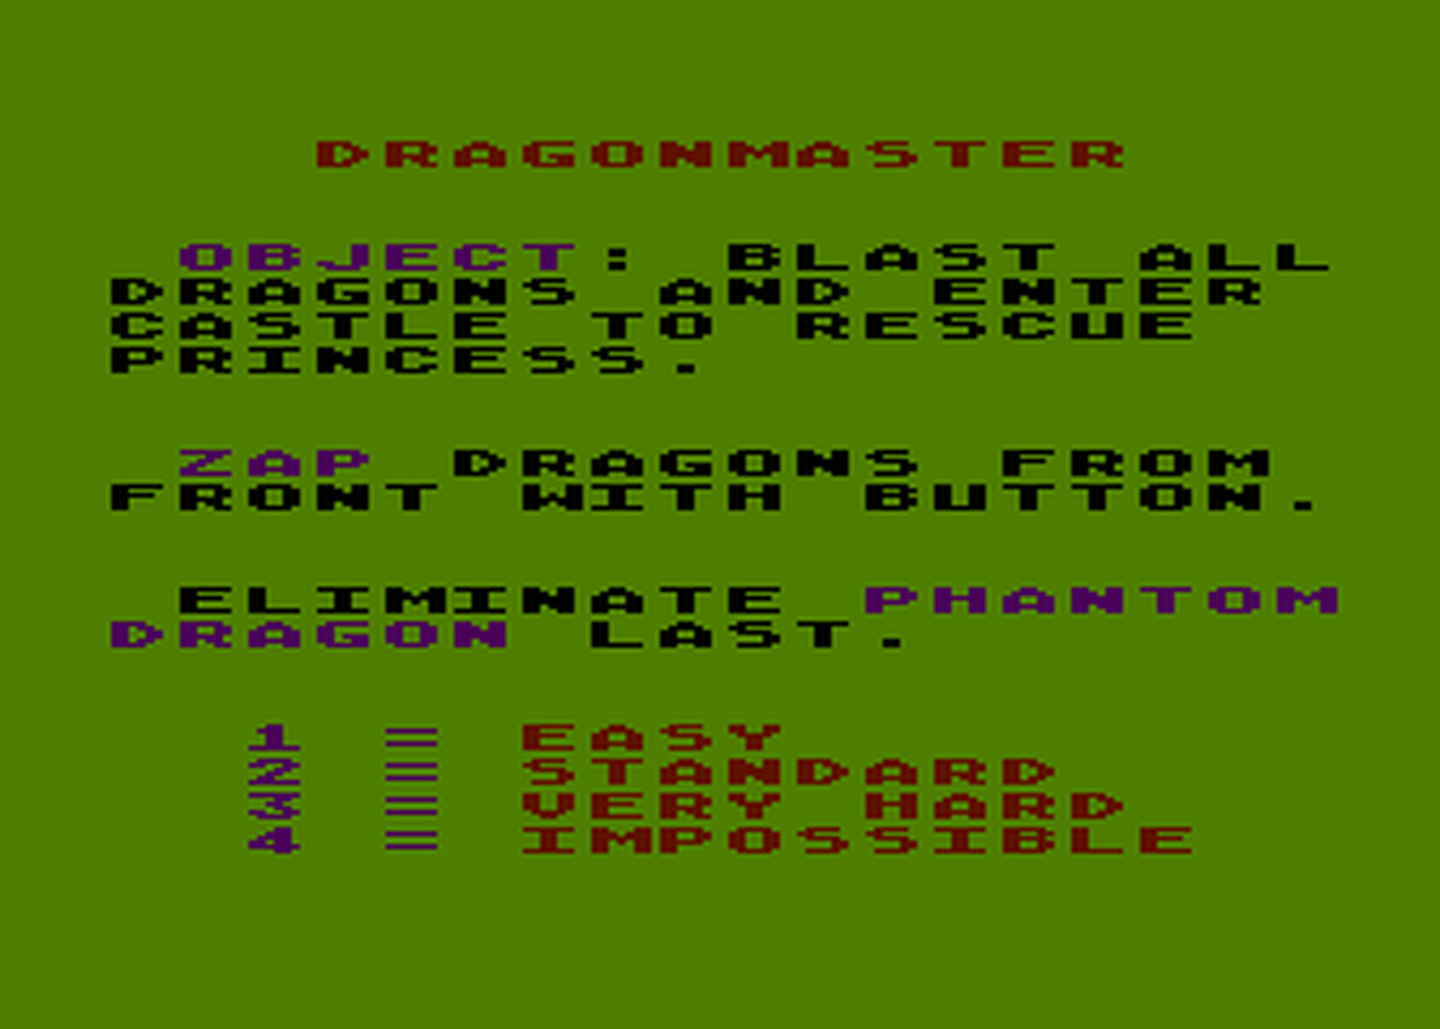 Atari GameBase Dragonmaster Compute! 1983